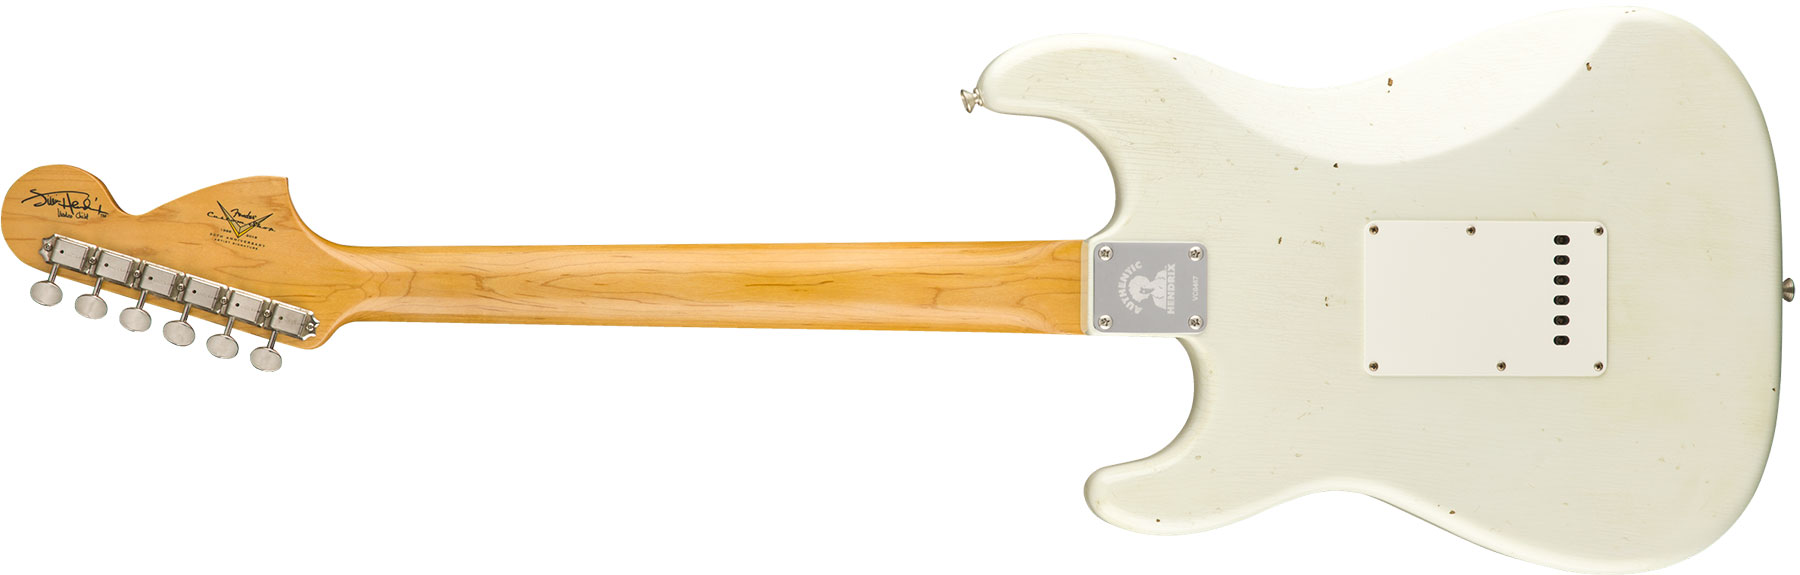 Fender Custom Shop Jimi Hendrix Strat Voodoo Child Signature 2018 Mn - Journeyman Relic Olympic White - Elektrische gitaar in Str-vorm - Variation 1